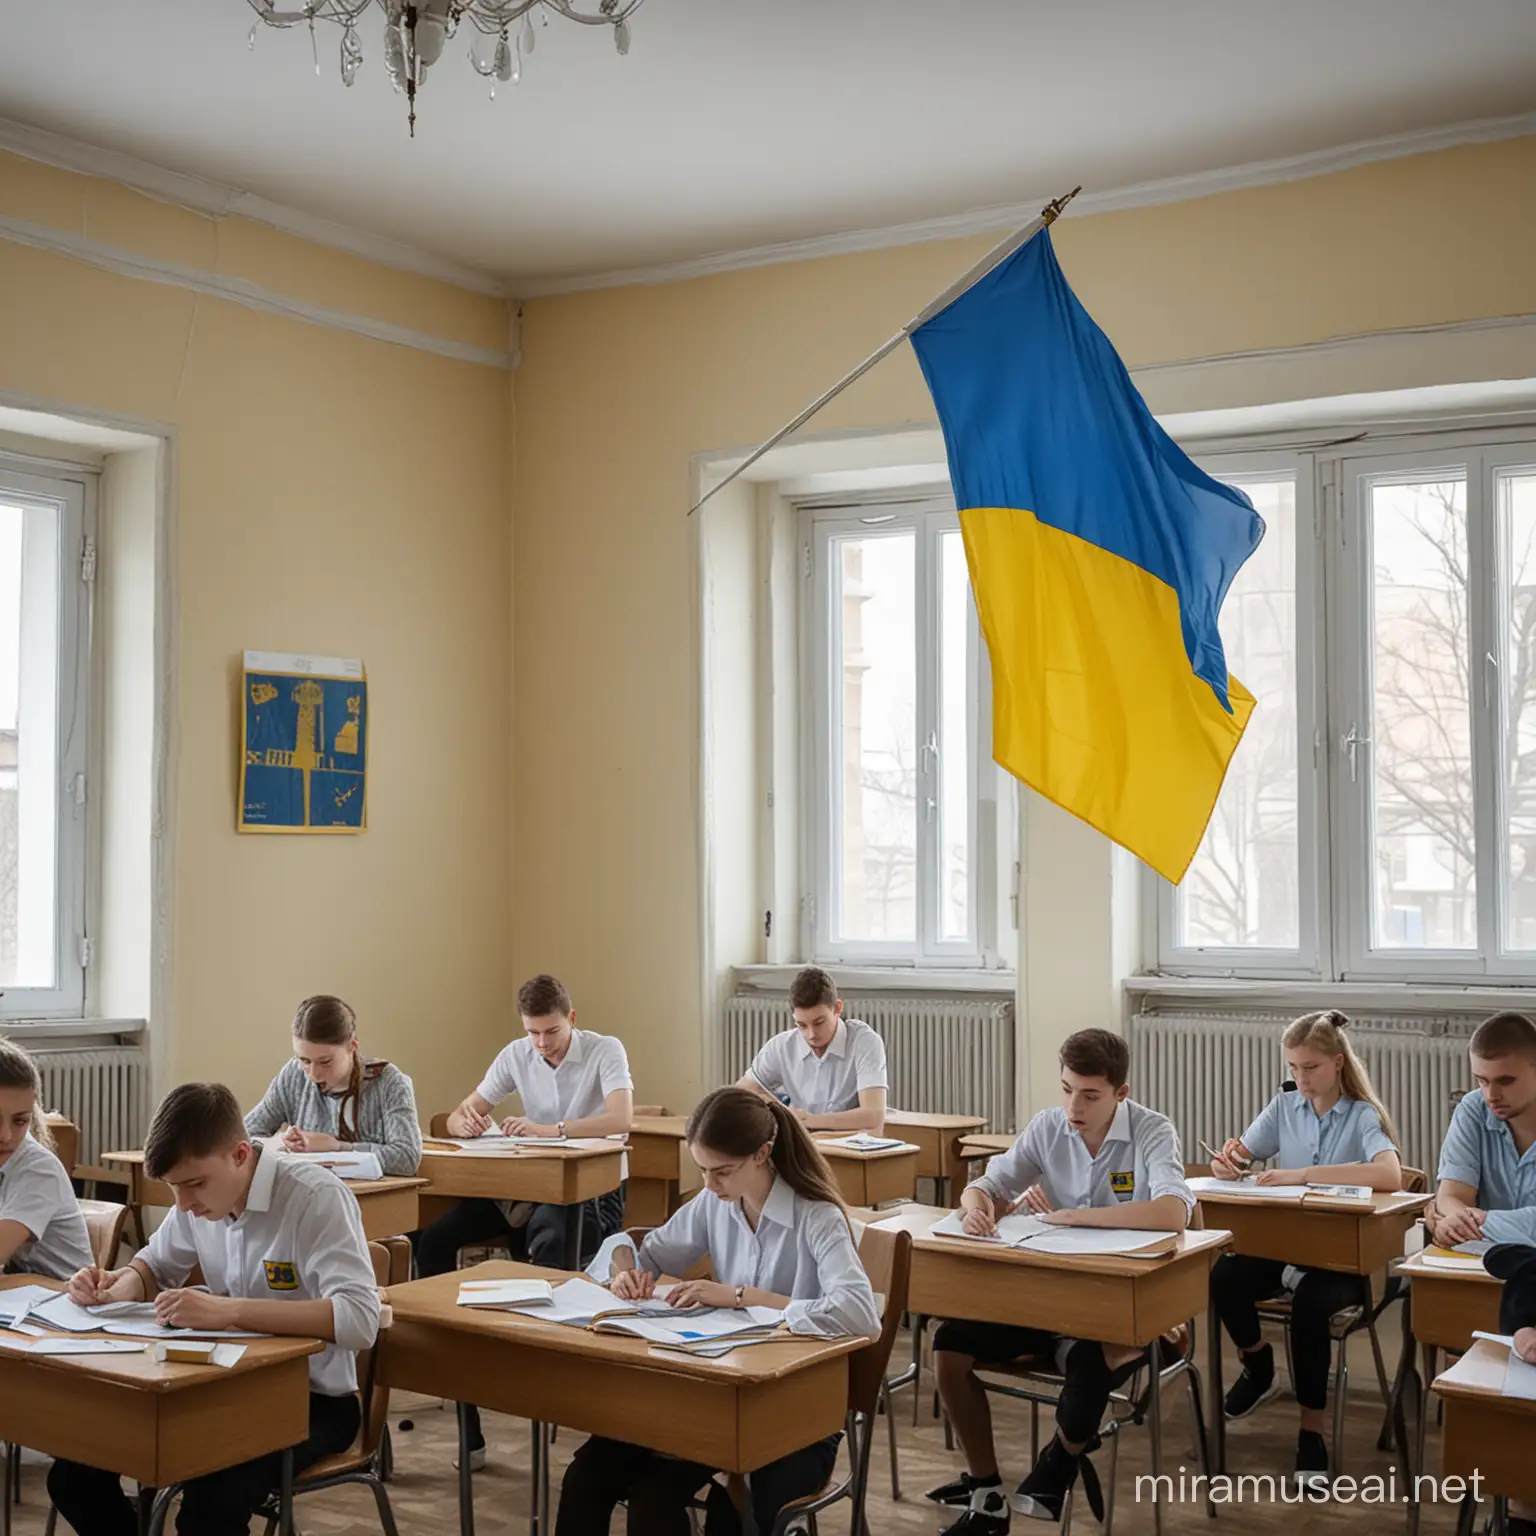 Ukrainian Classroom with Flag Display